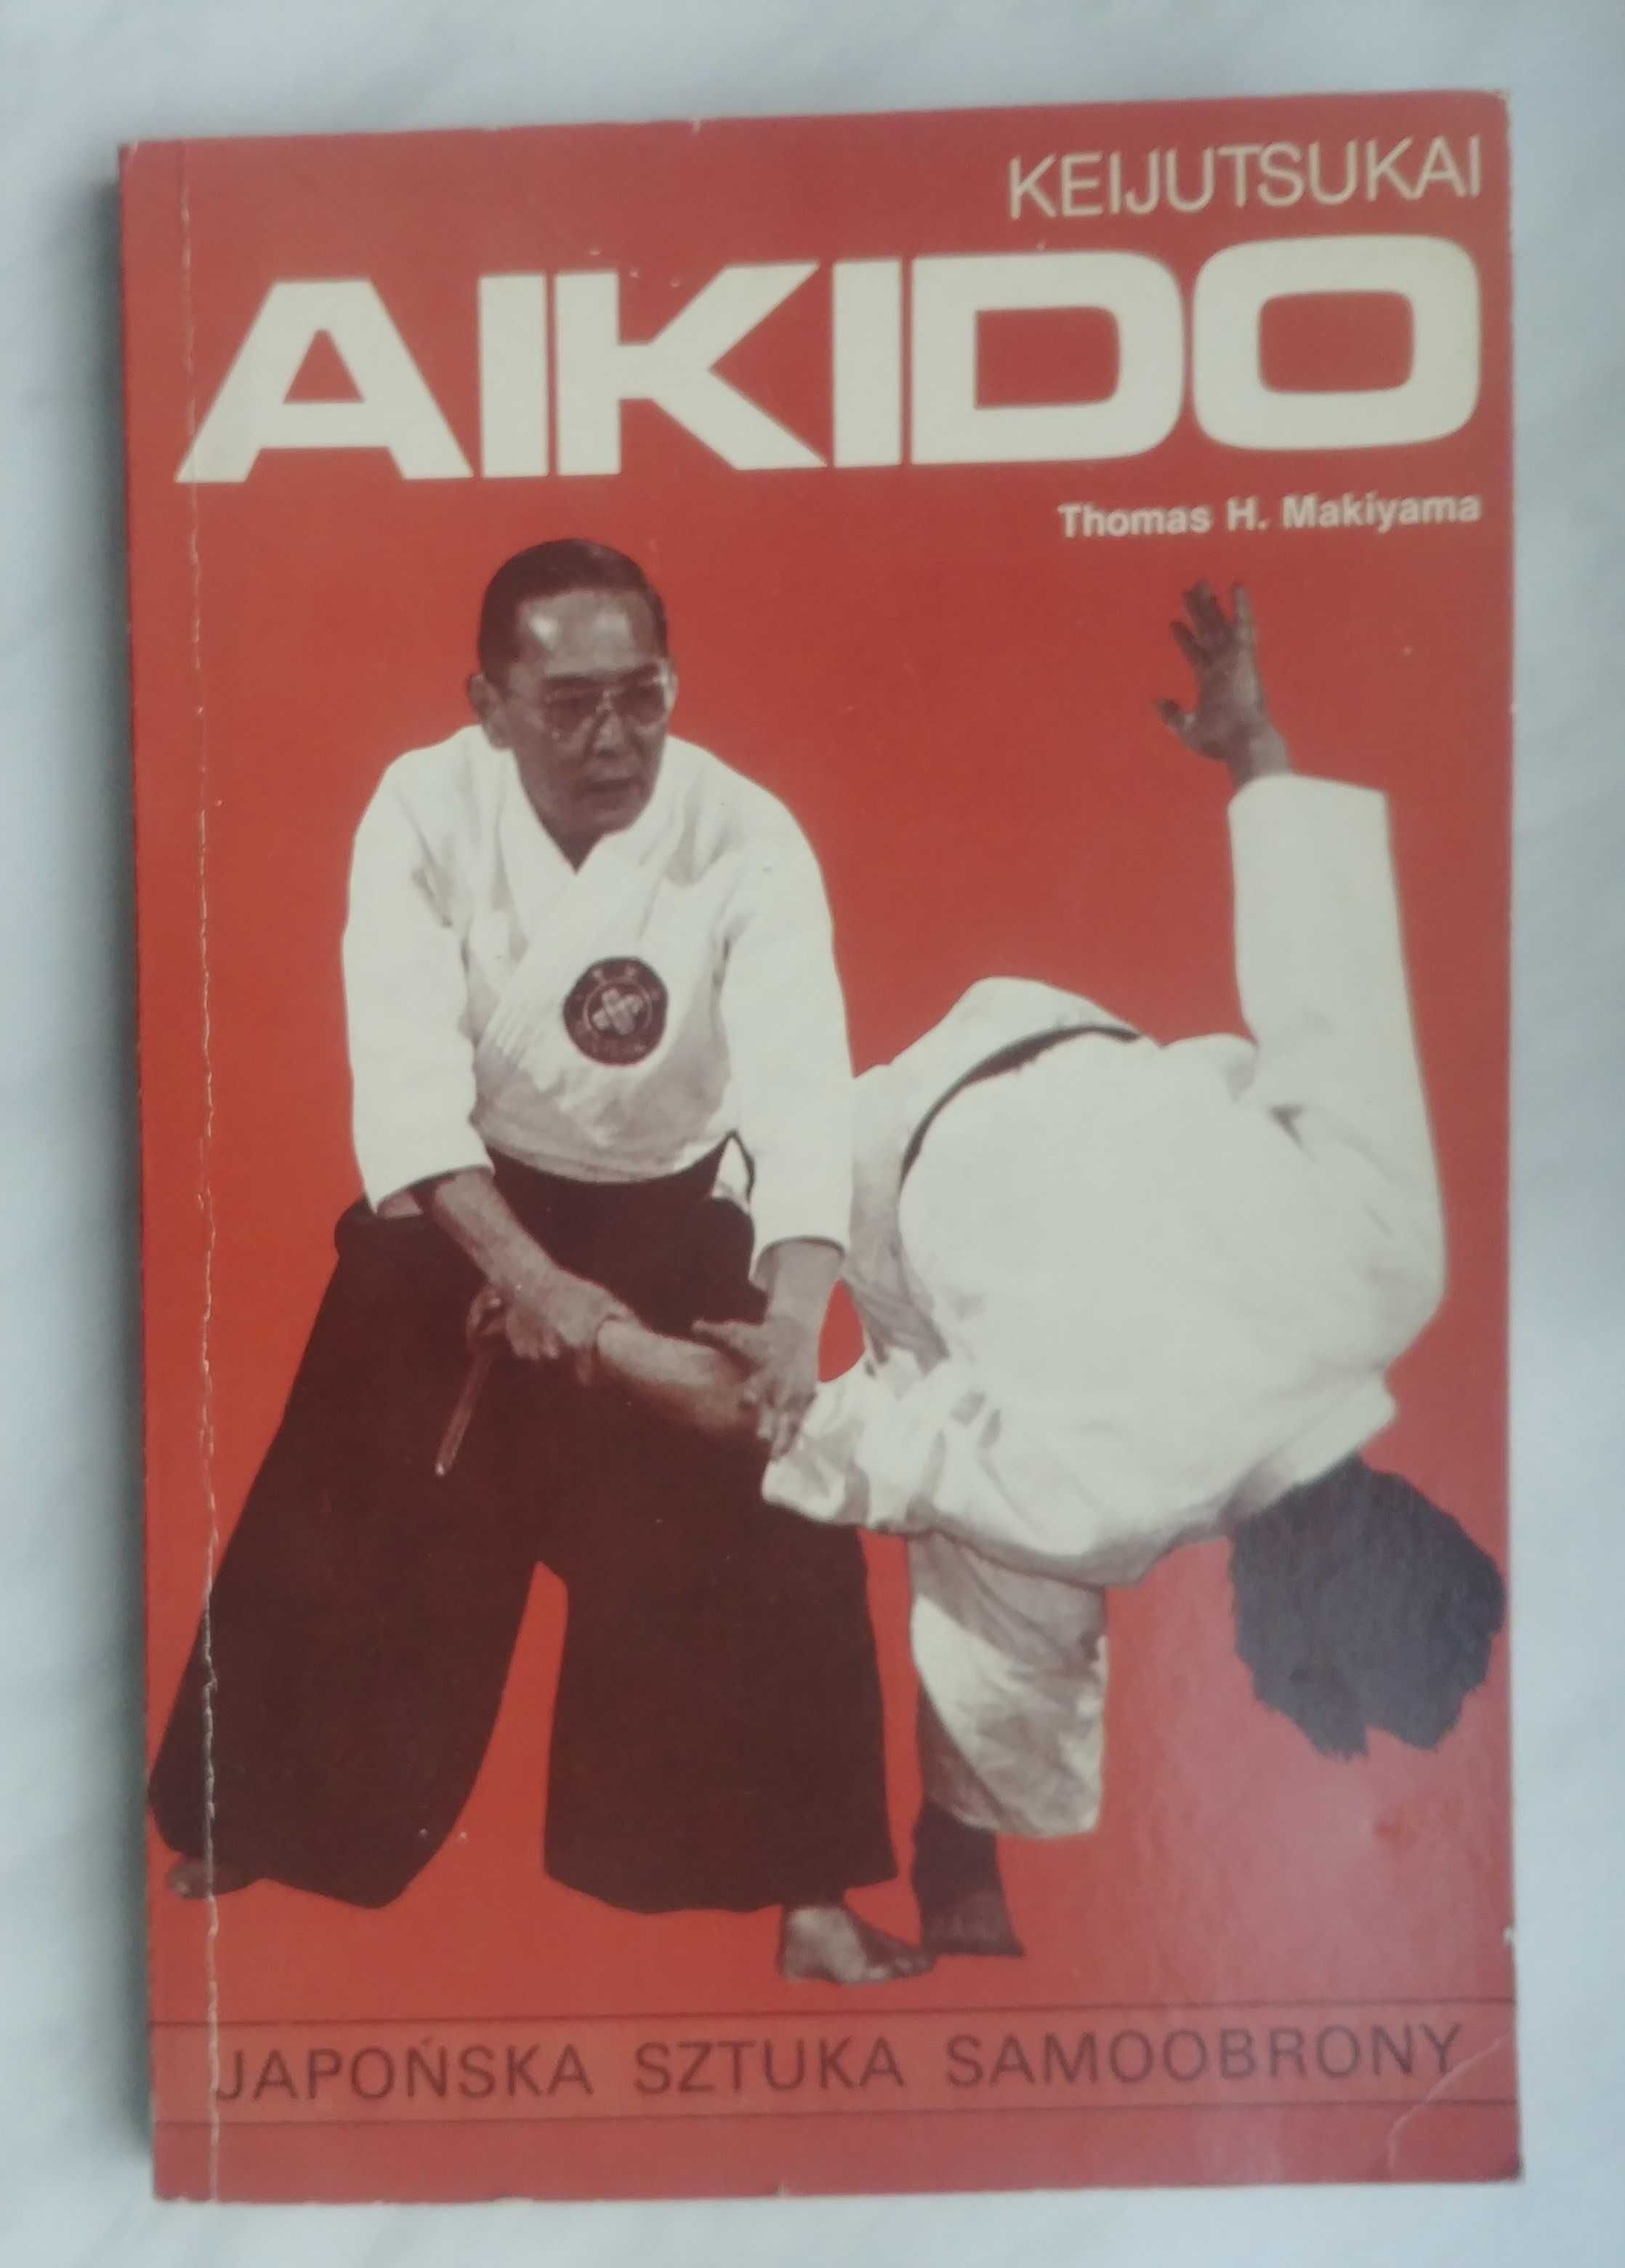 Thomas Makiyama - Keijutsukai Aikido